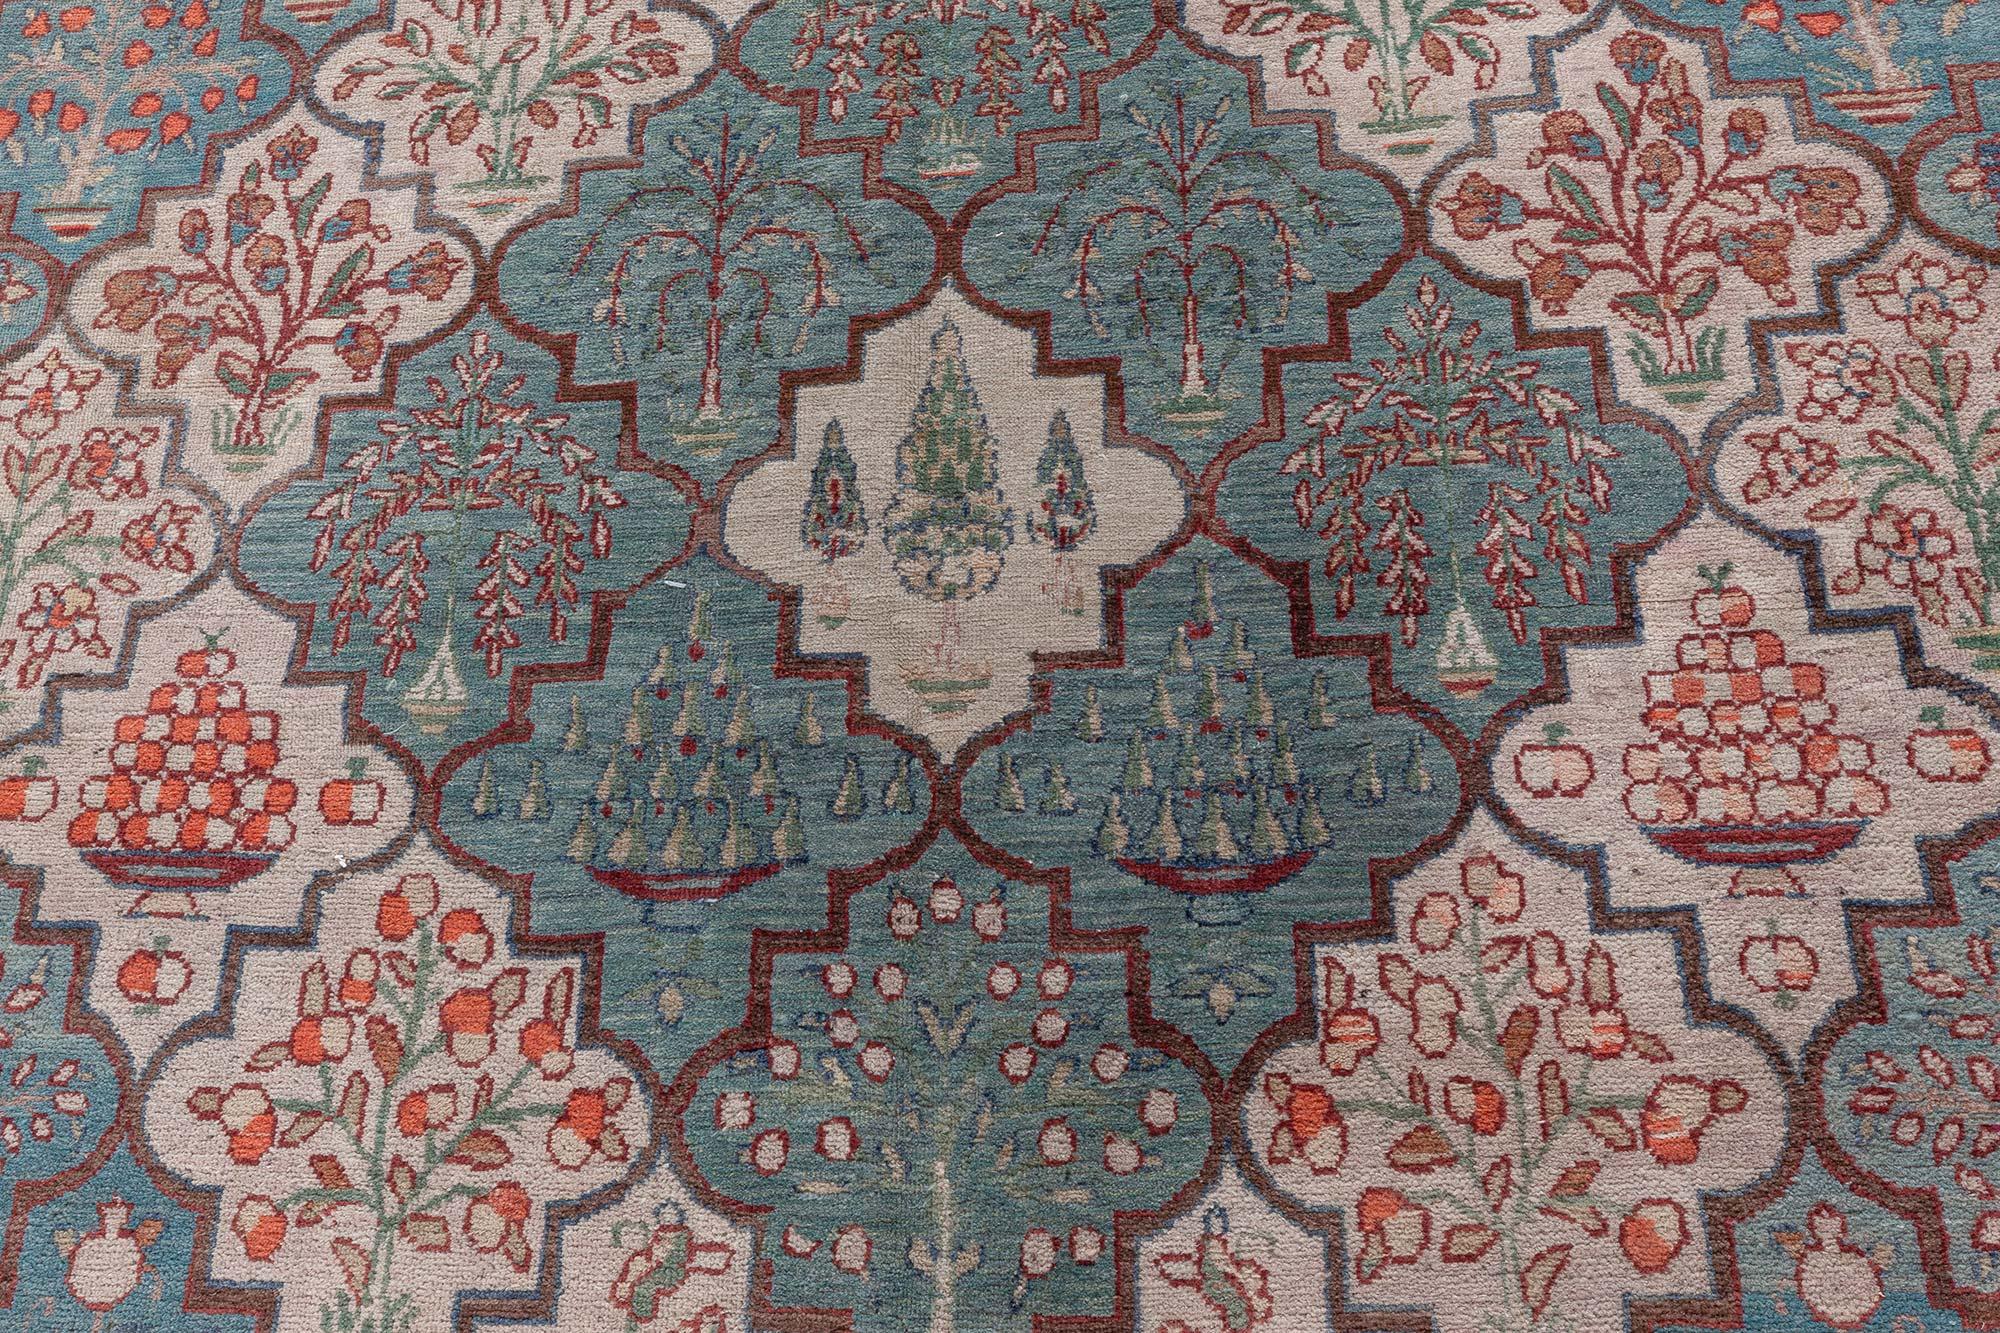 Antique Persian Kirman Rug
Size: 10'0